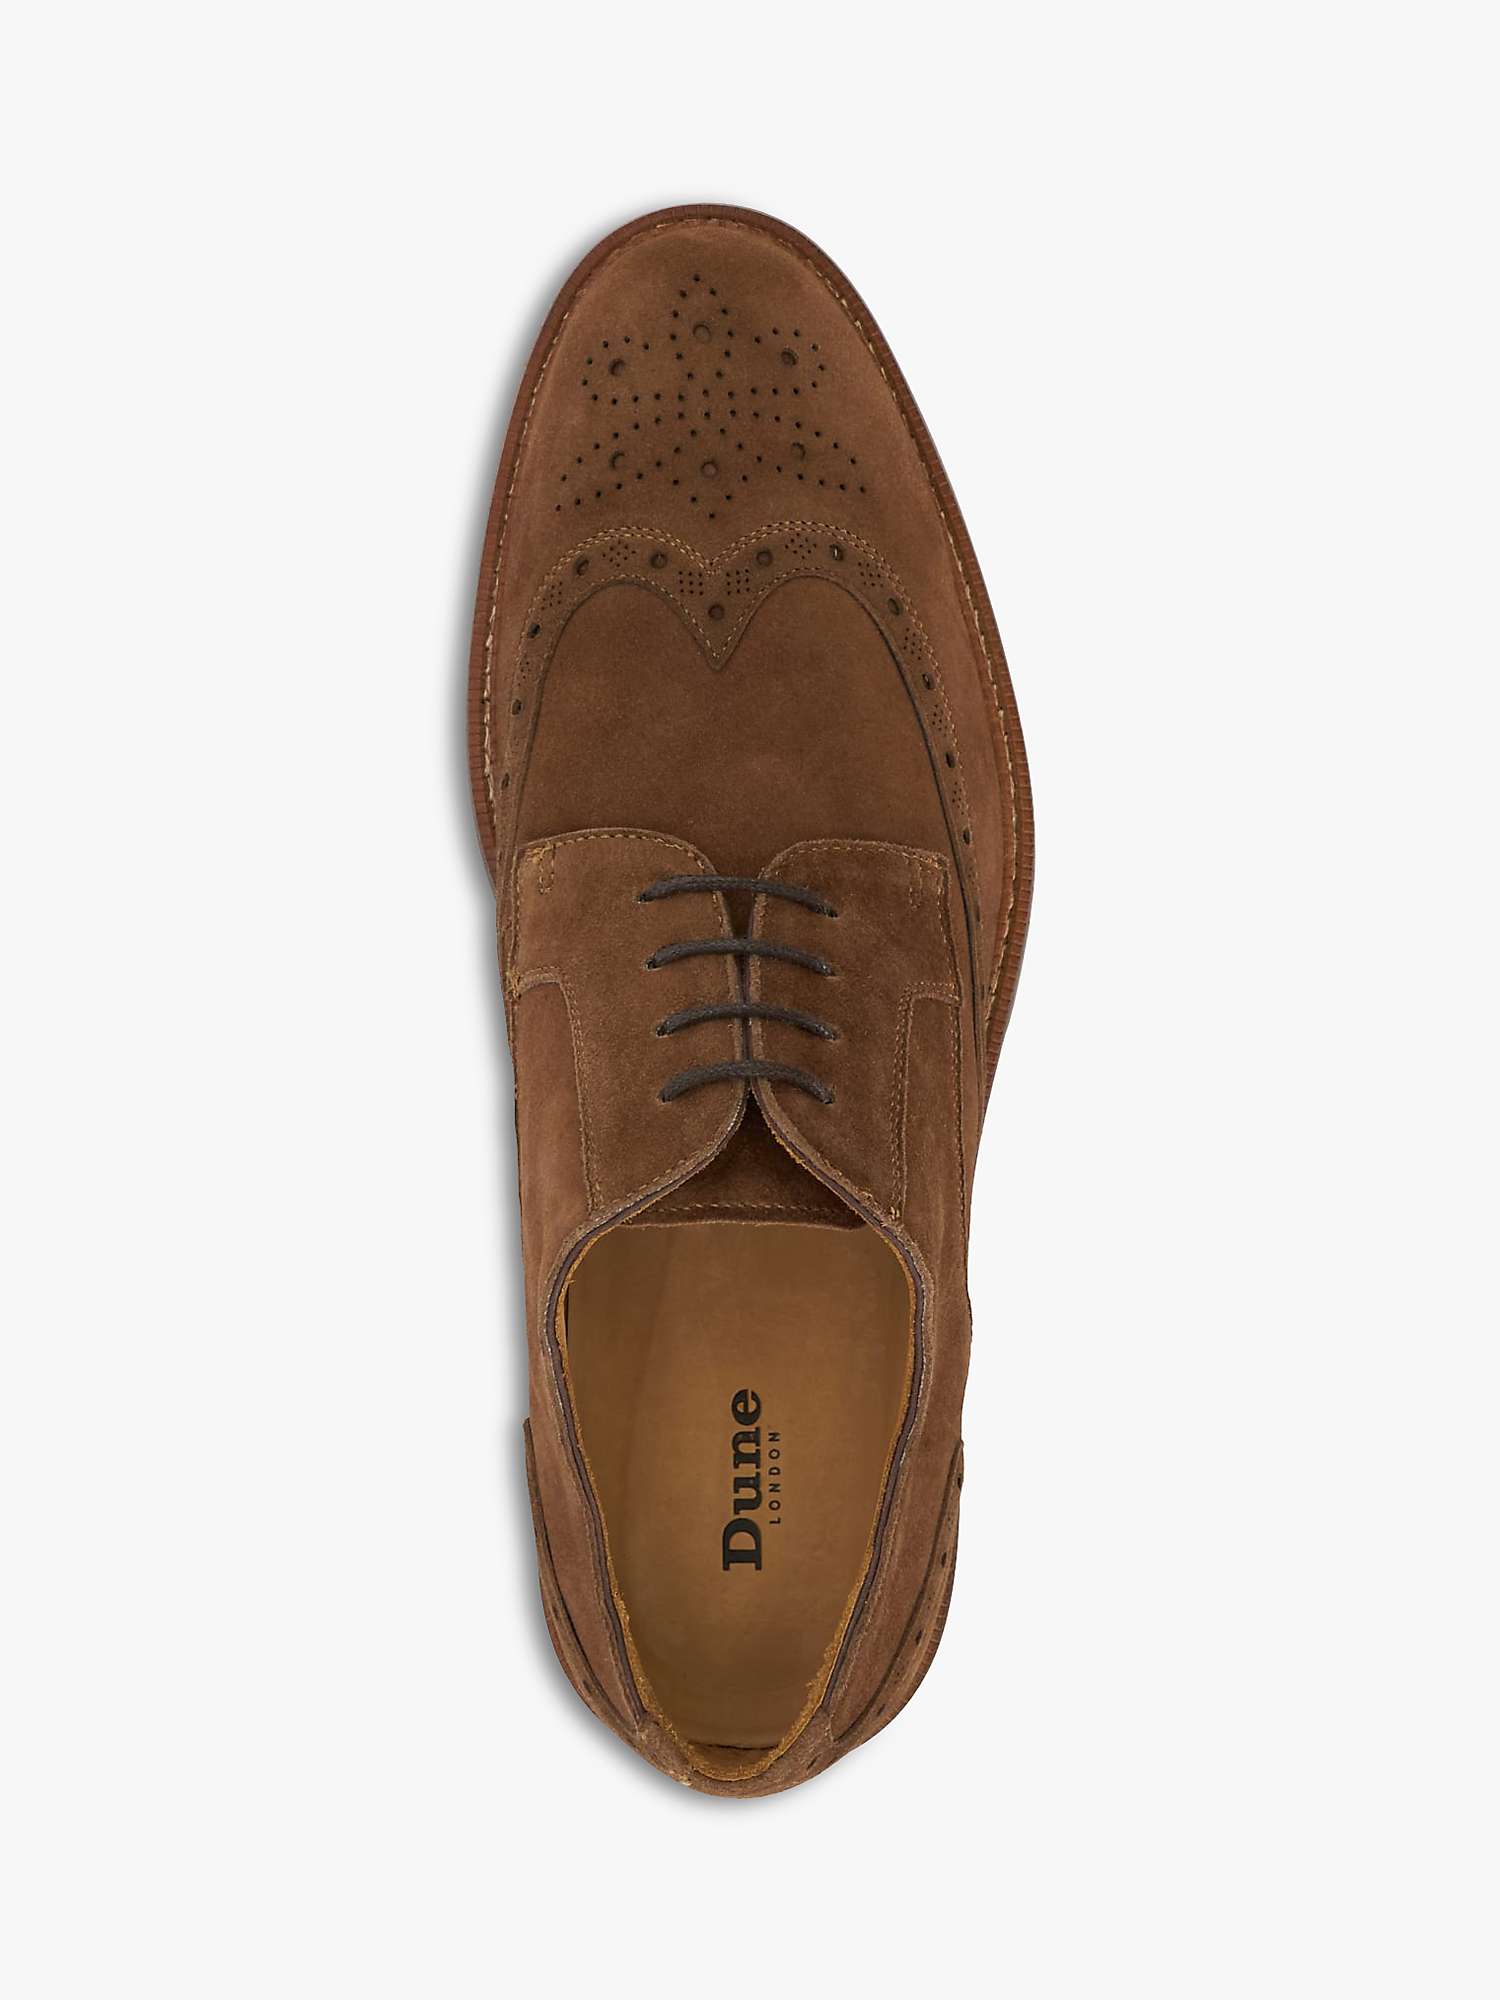 Buy Dune Spenccer Suede Wingtip Brogue Shoes, Brown Online at johnlewis.com